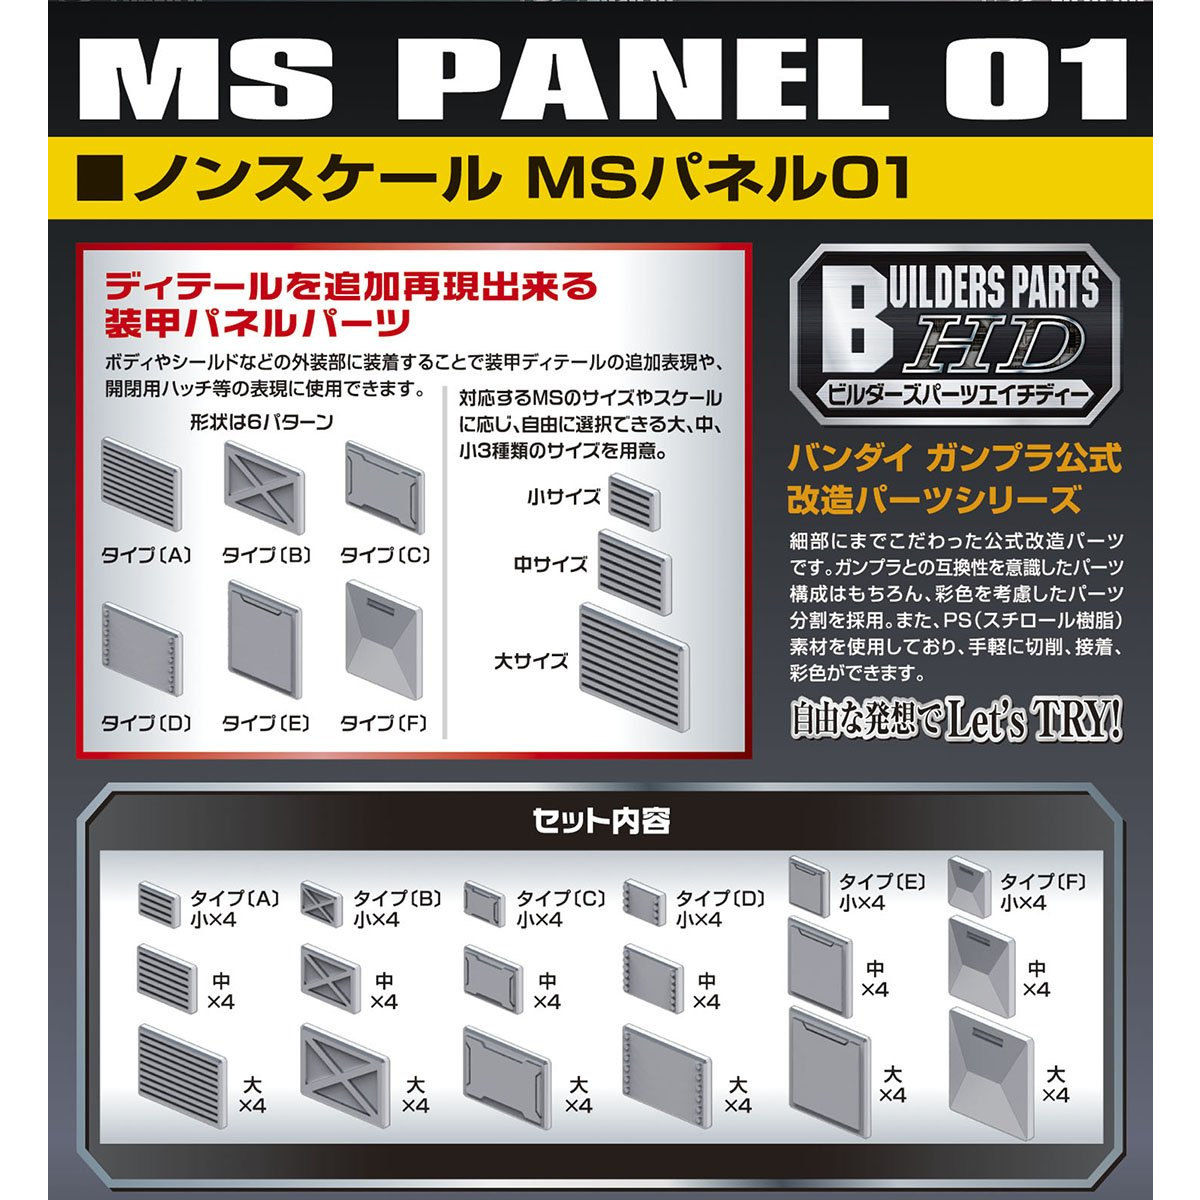 Builders parts HD19 non-scale MS panel 01